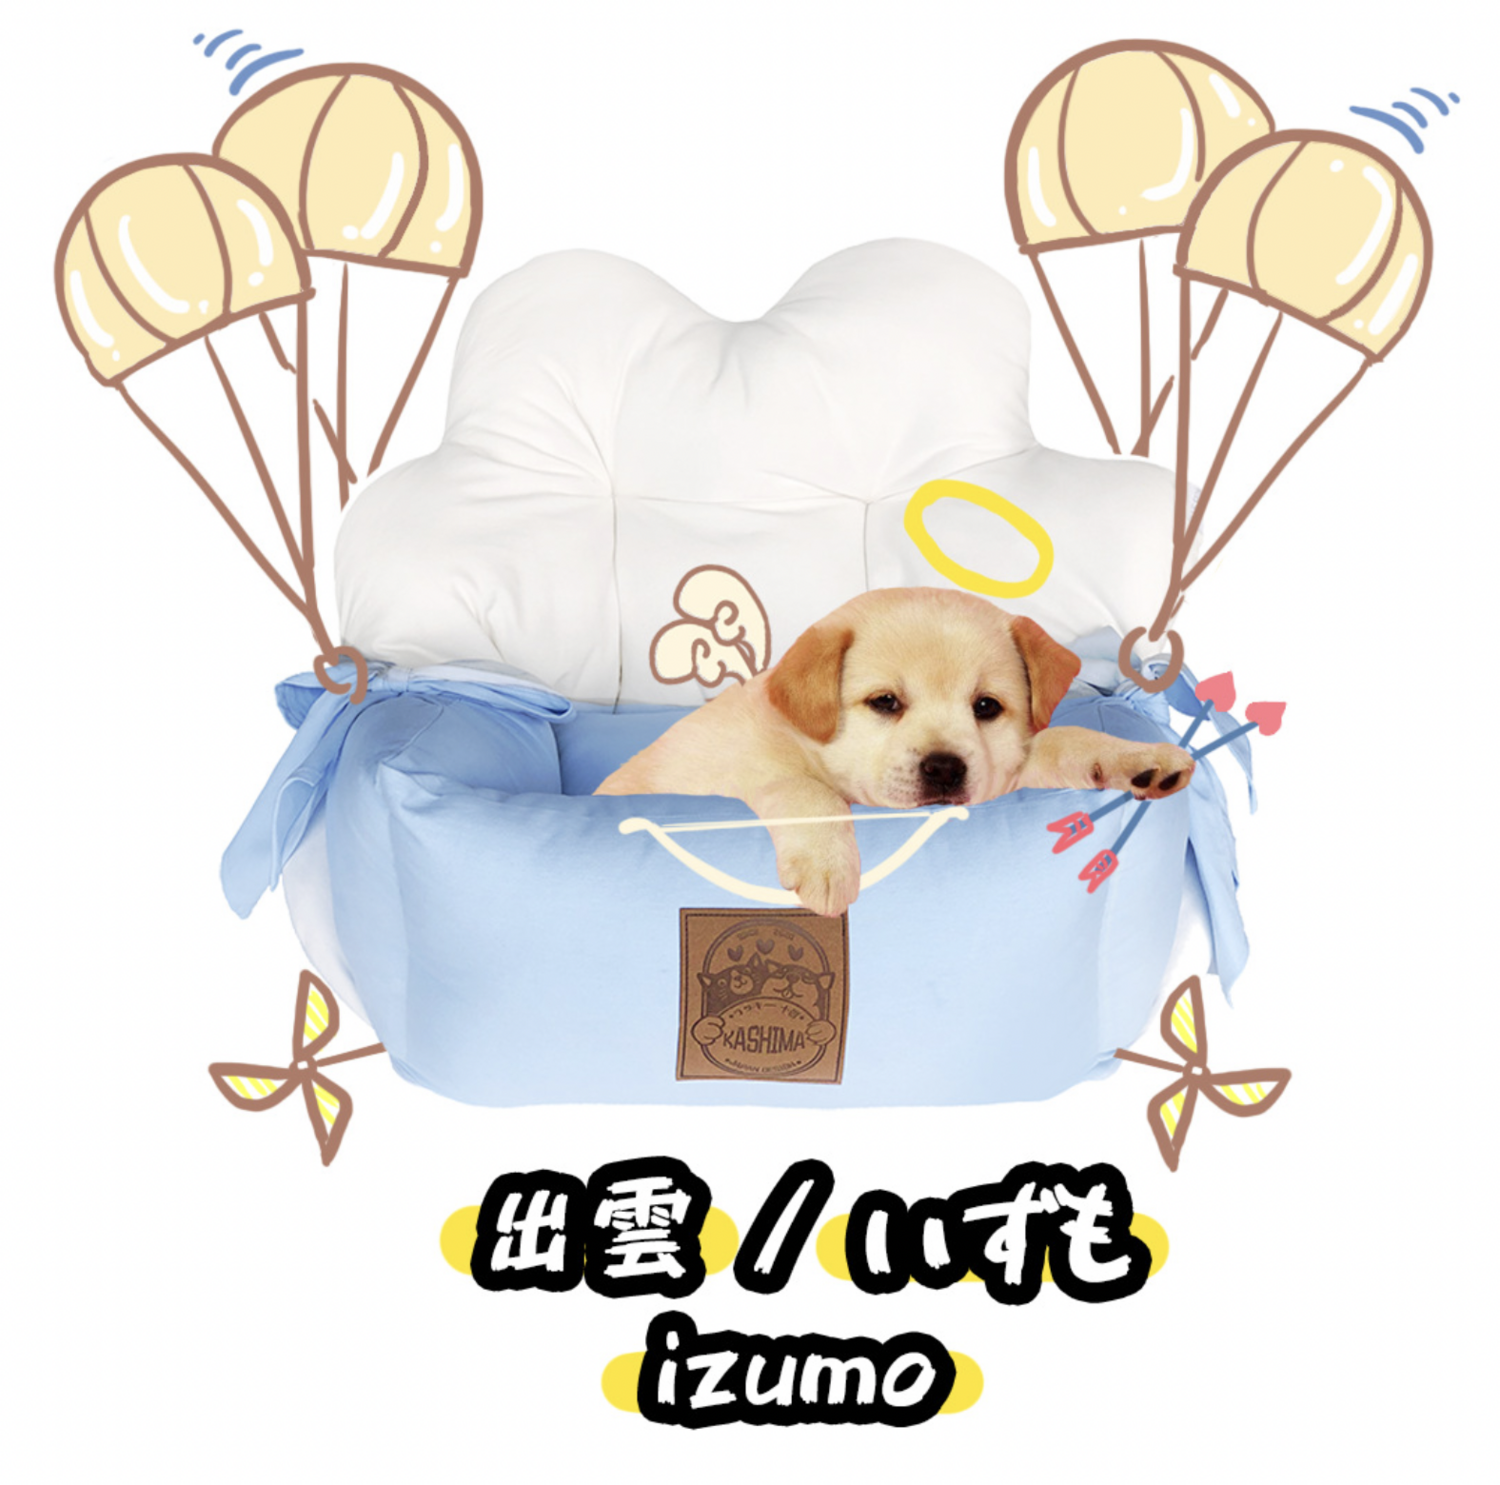 izumo cloud shape dog/cat car seat - 云朵车载座椅